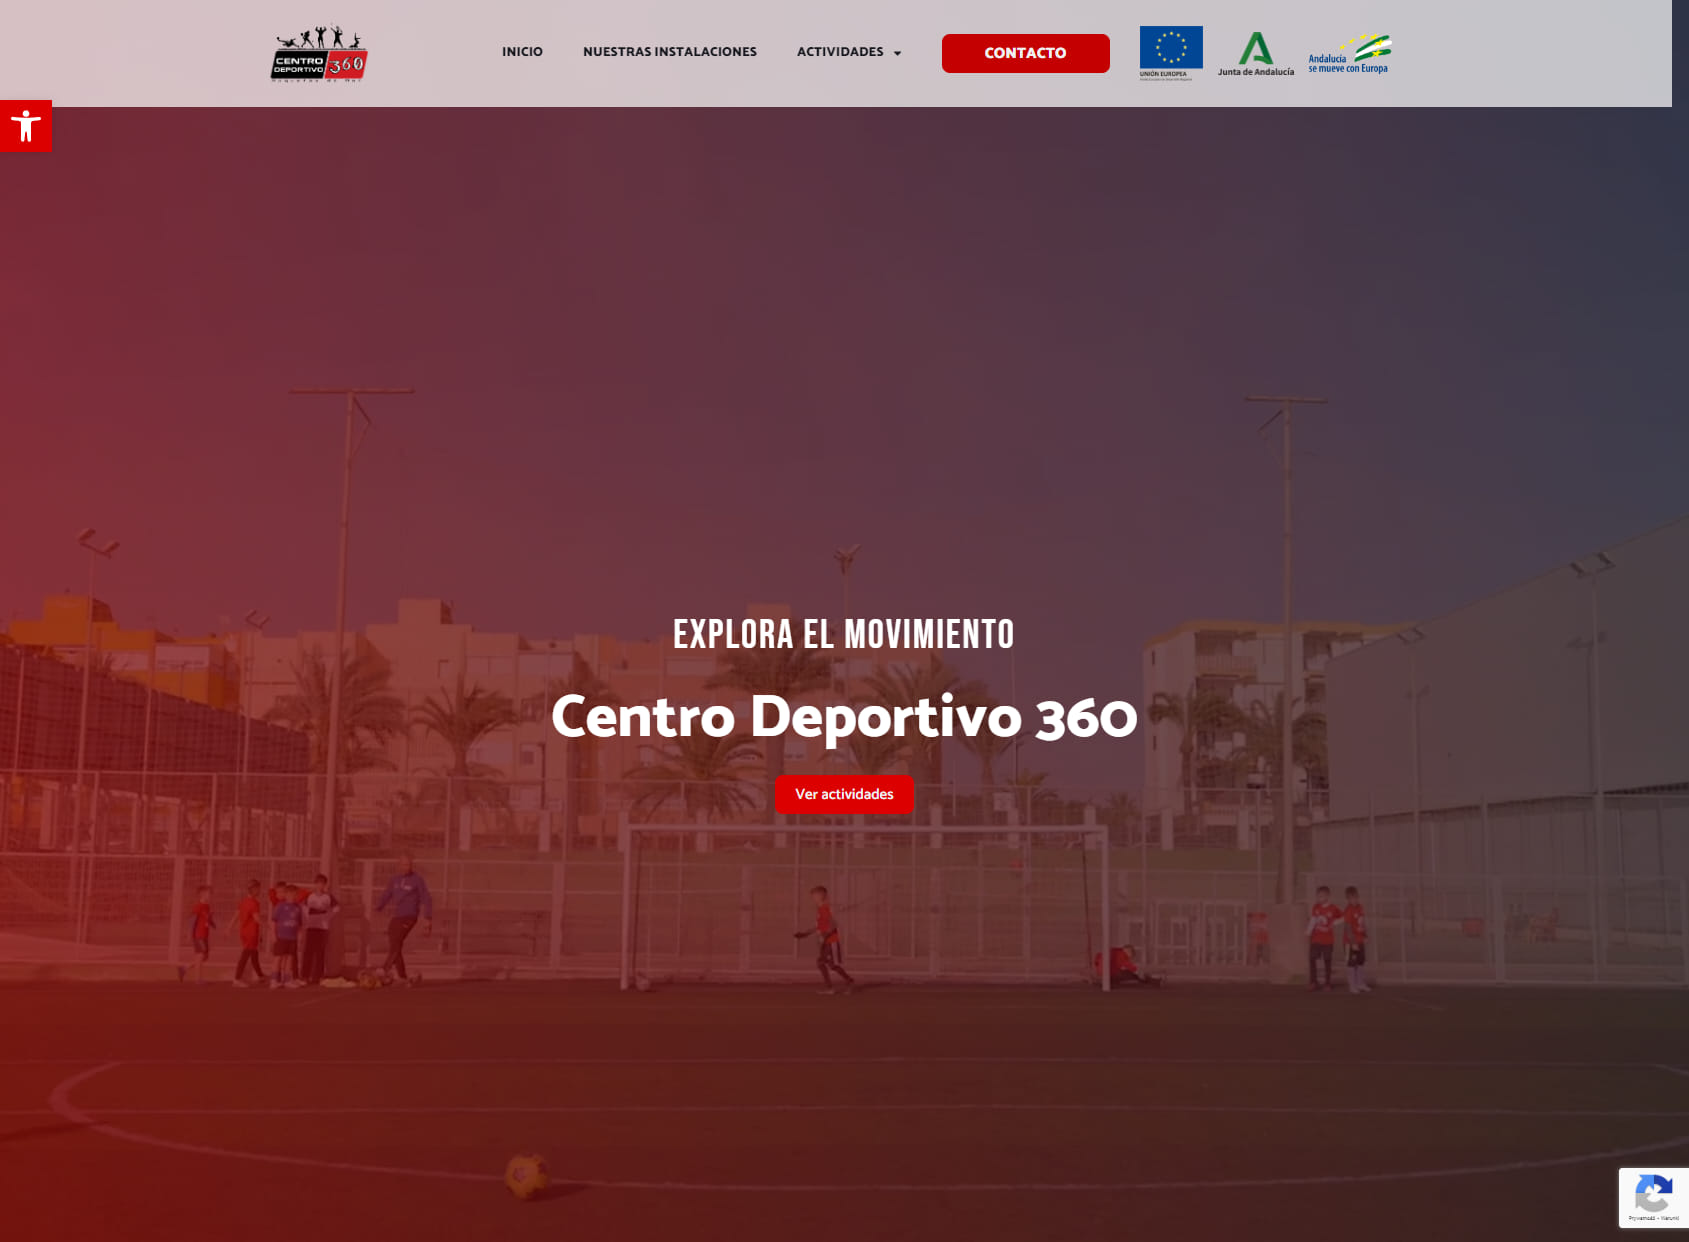 Sports center 360